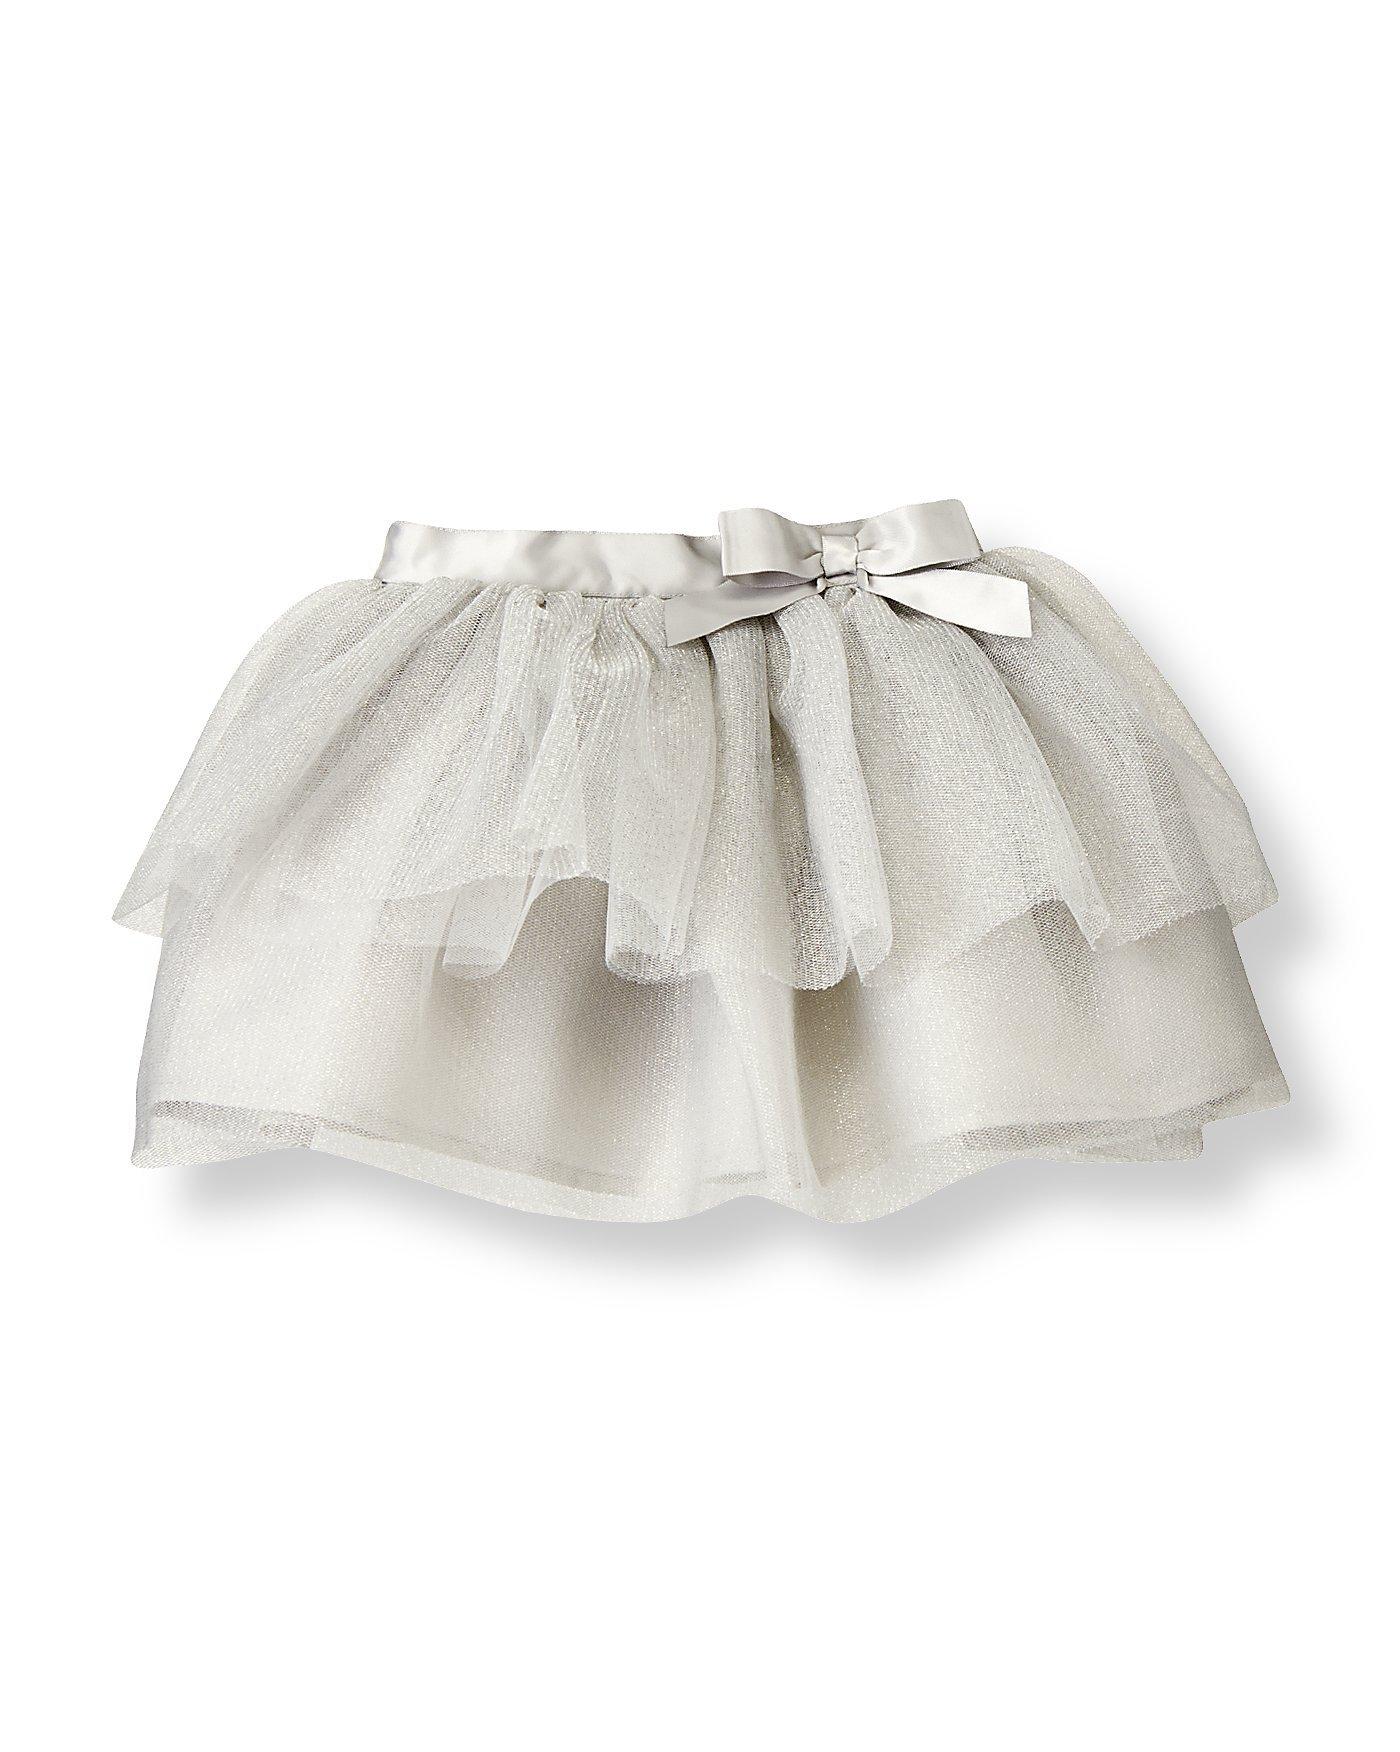 Metallic Silver Tulle Skirt image number 0